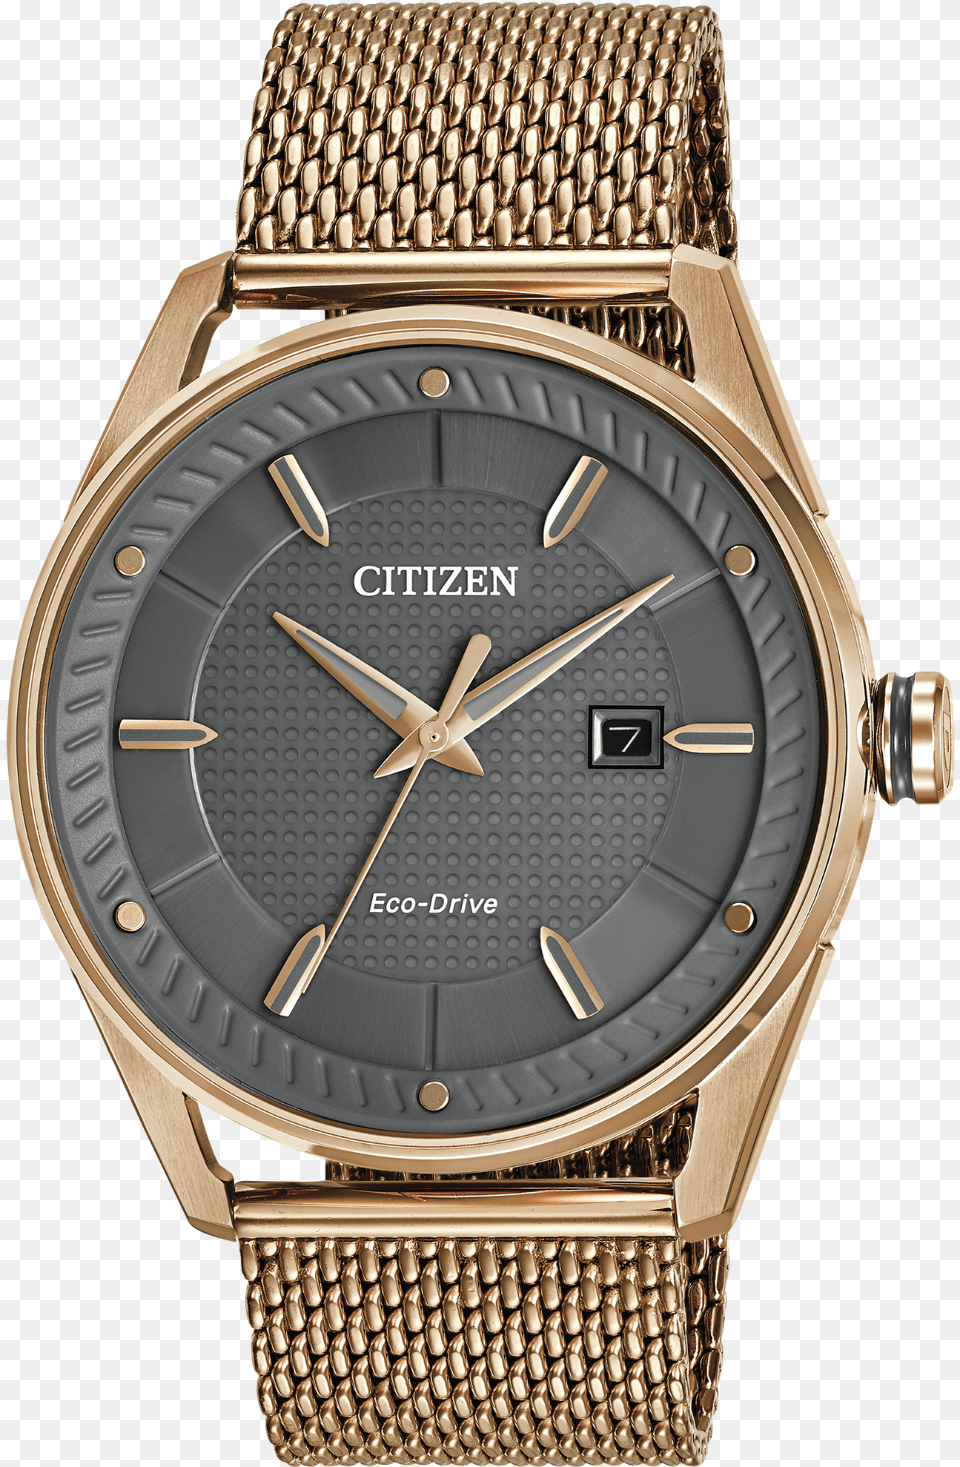 Images Citizen Leather Band, Arm, Body Part, Person, Wristwatch Free Transparent Png